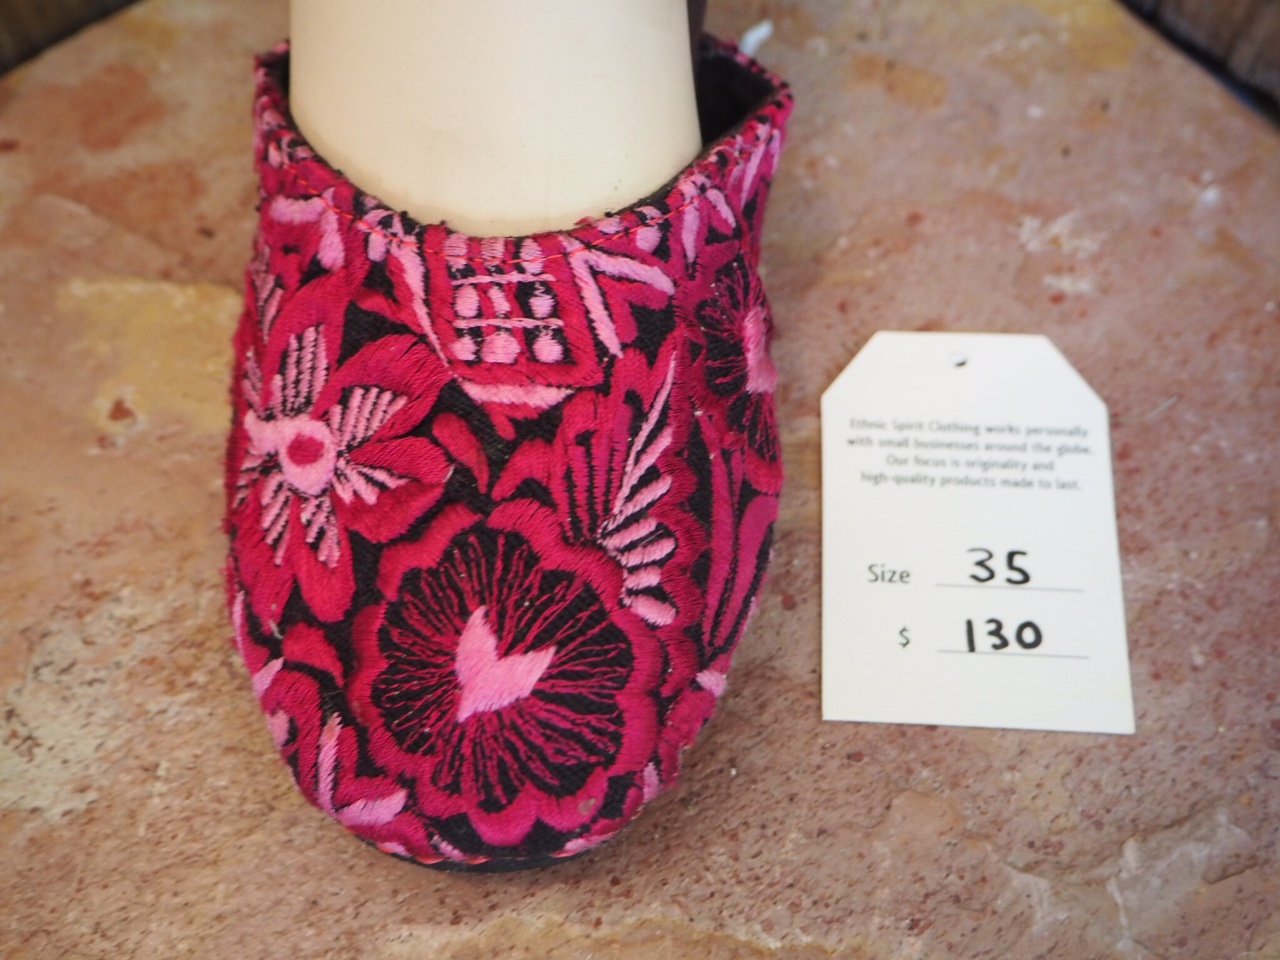 Size 35 Ballerina Sandals - Pink Flowers